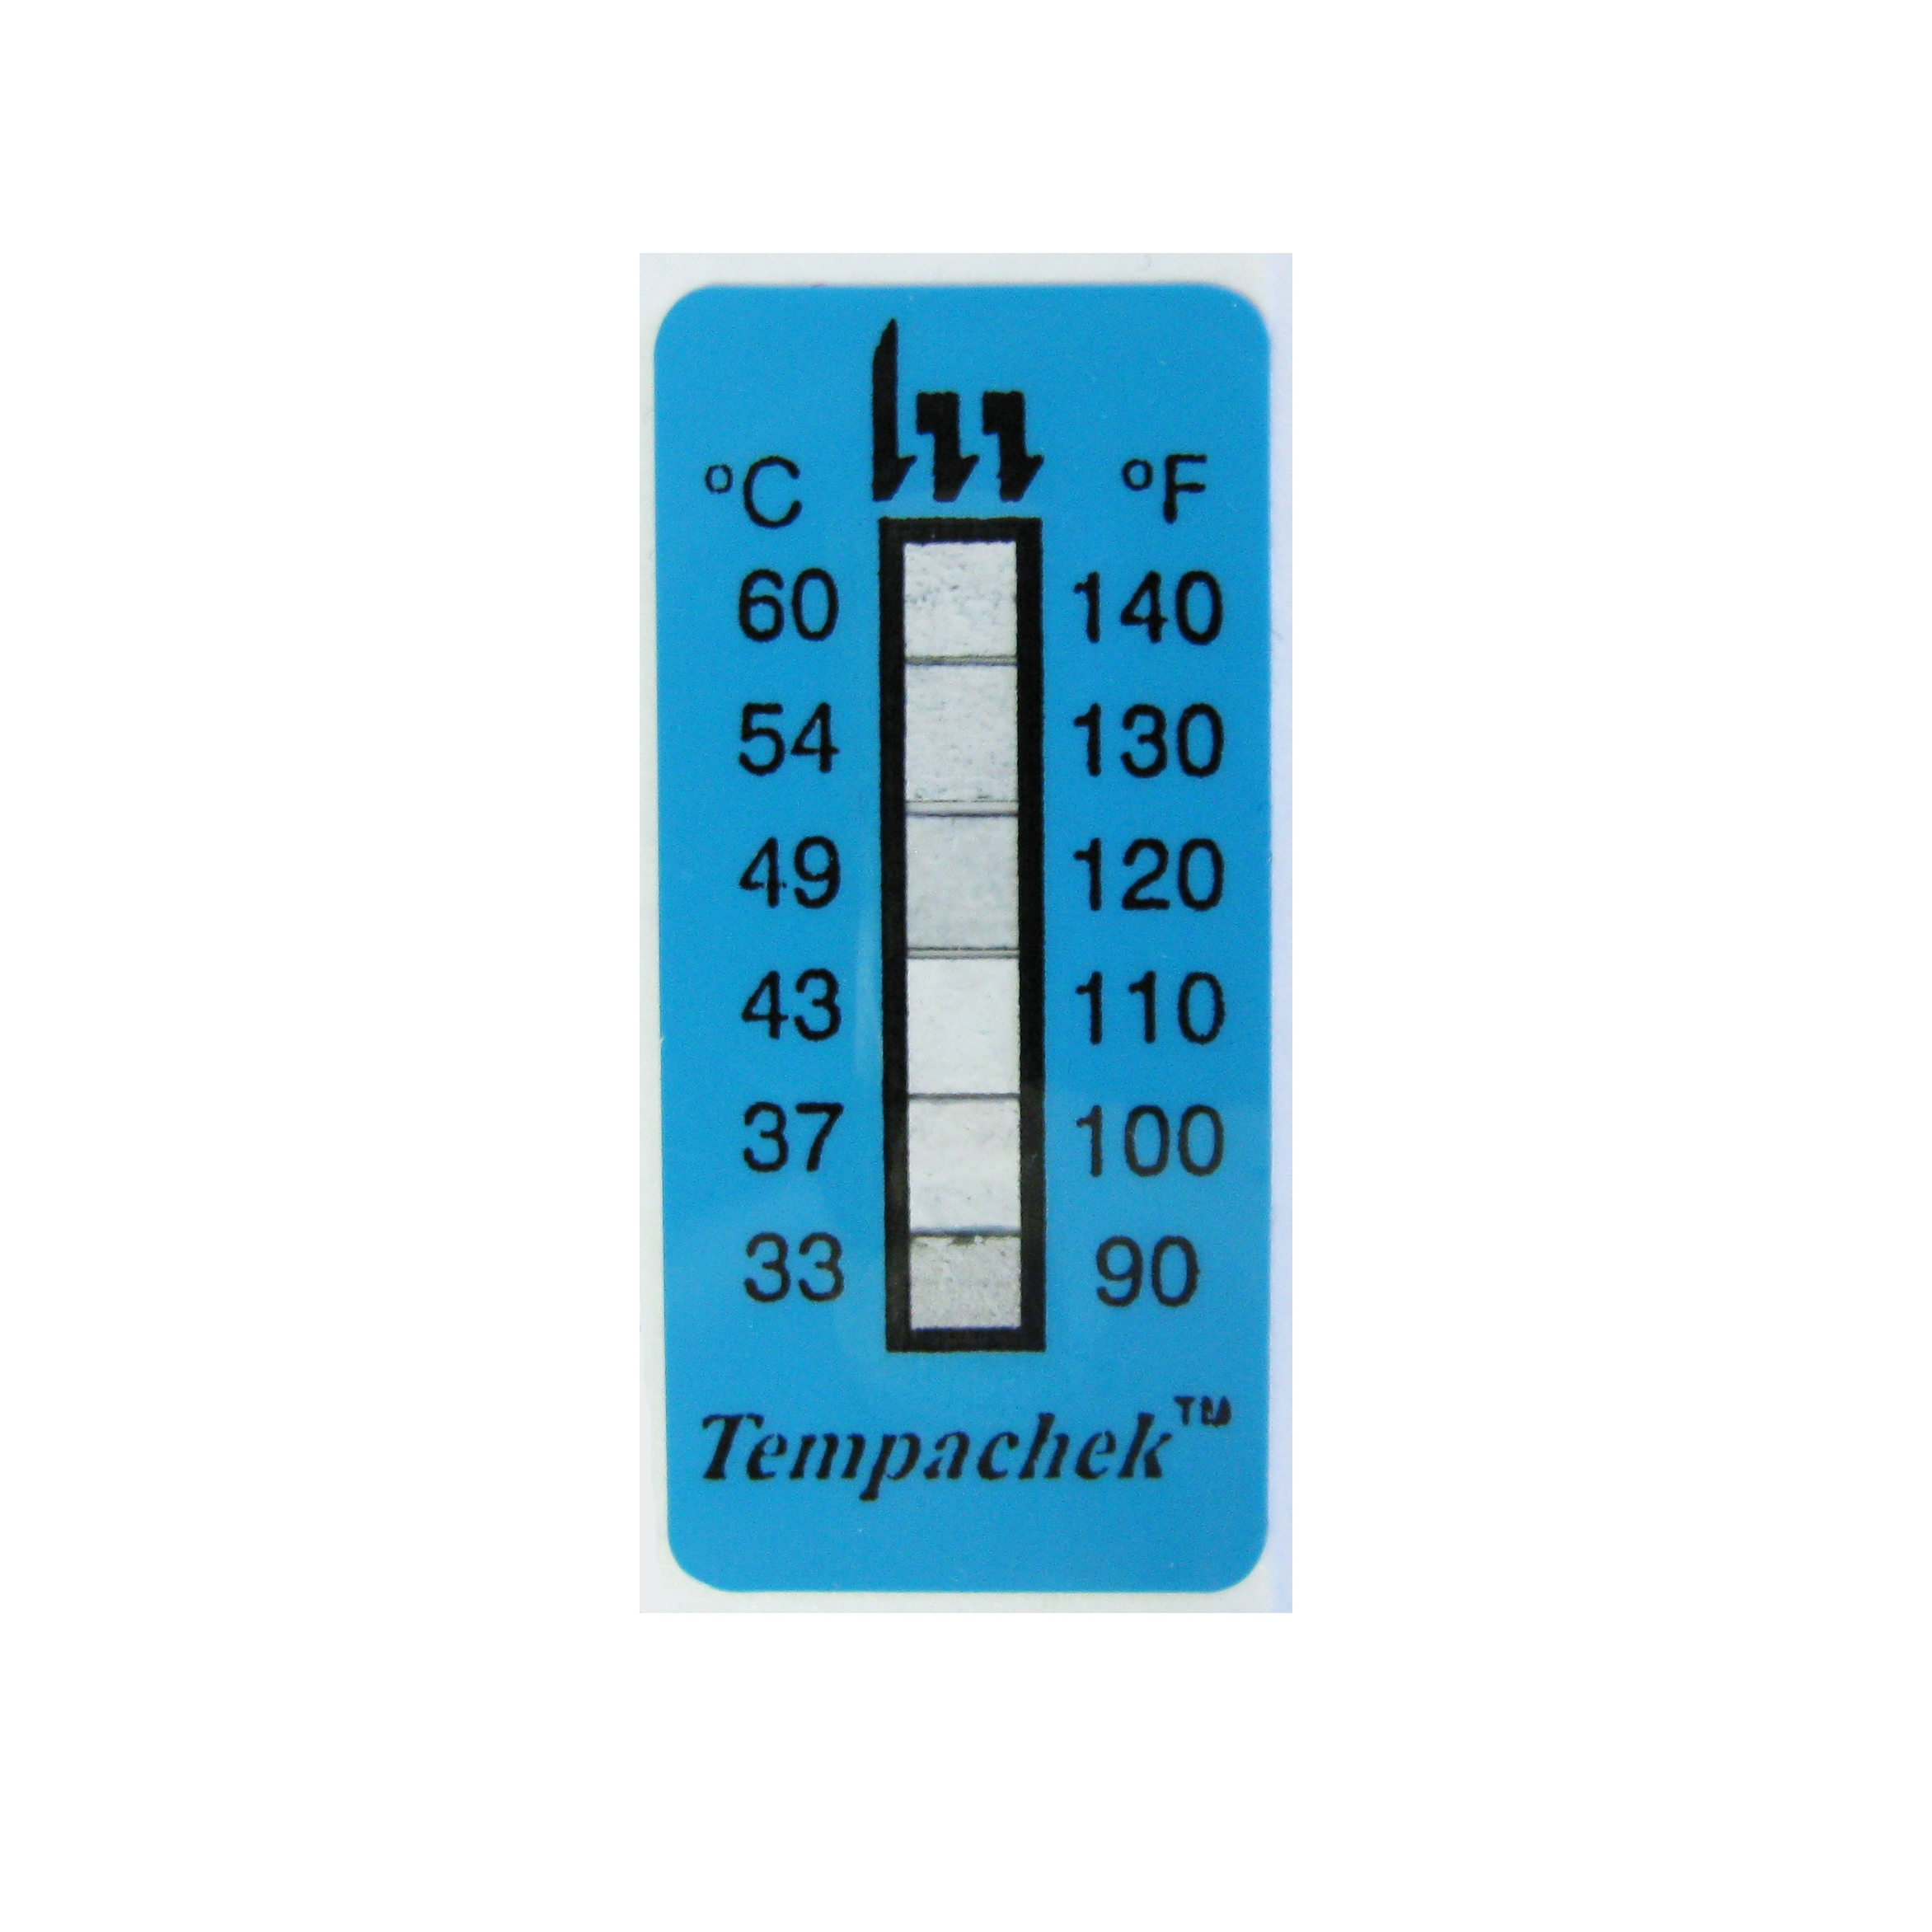 Cleaning Verification - TempaChek 90 - Healthmark Industries